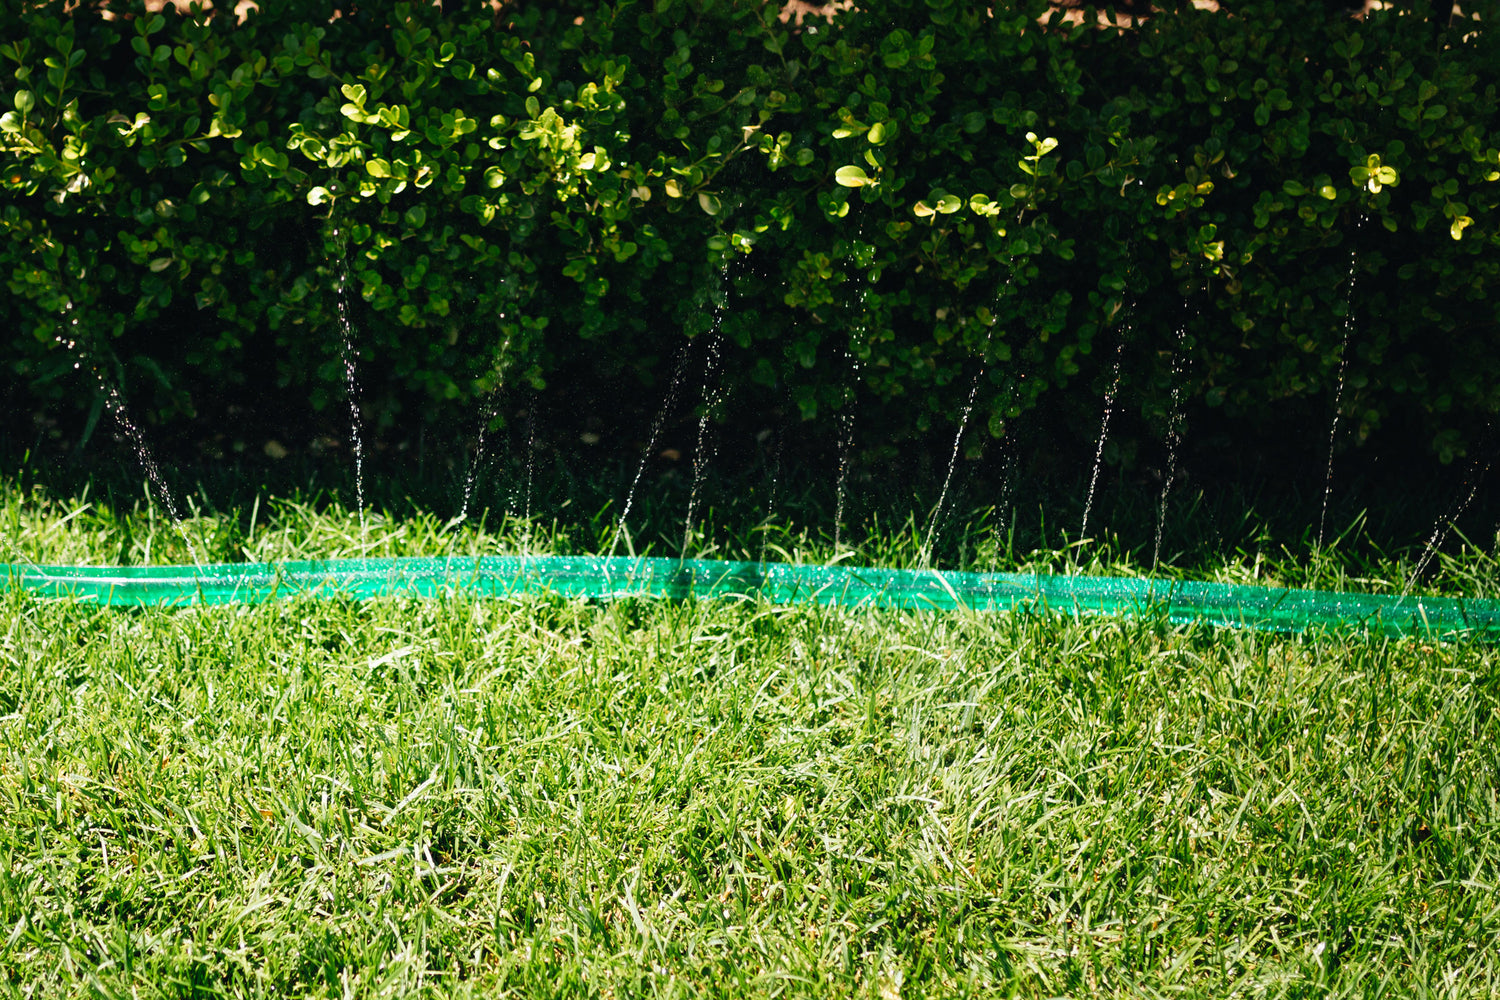 Soaker Hose Spraying Water Across a Green Lawn